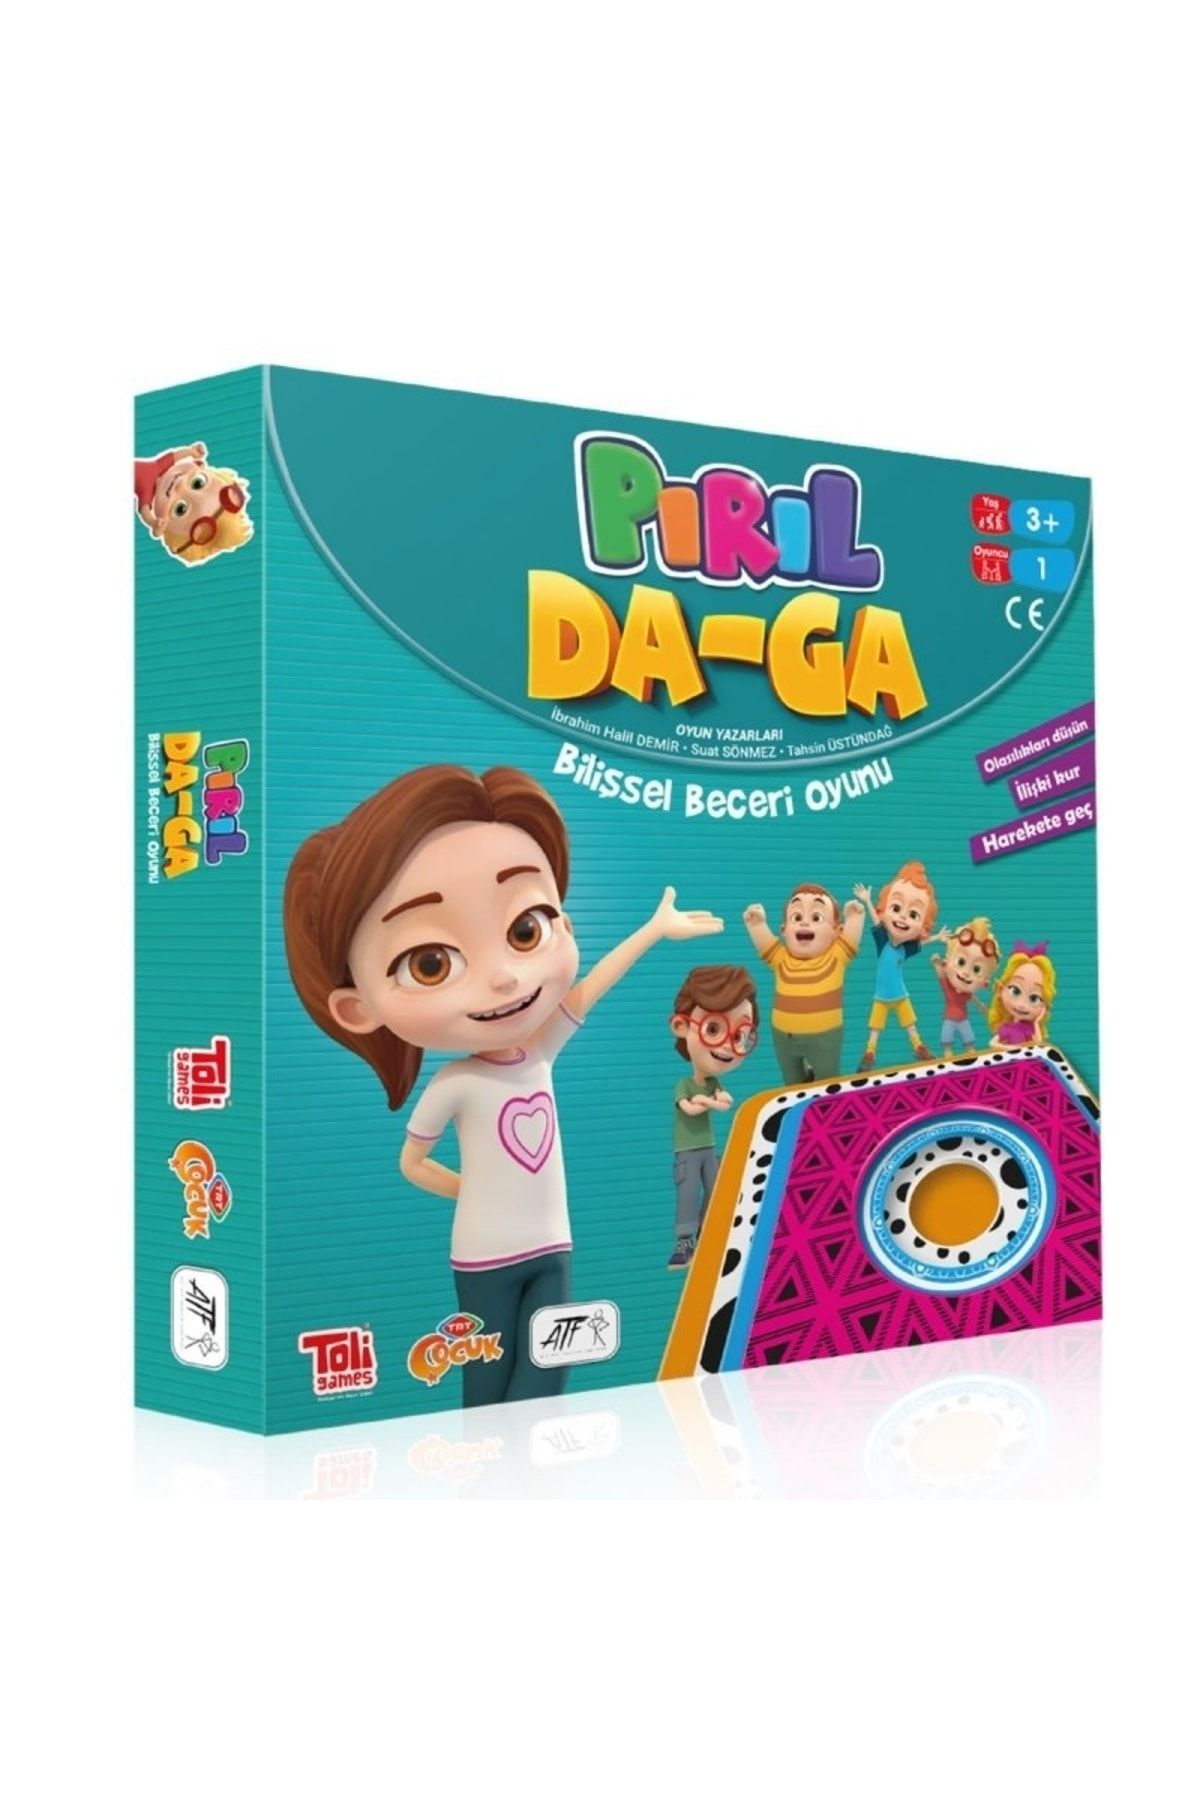 Toli Games Da - Ga بازی مهارت های شناختی